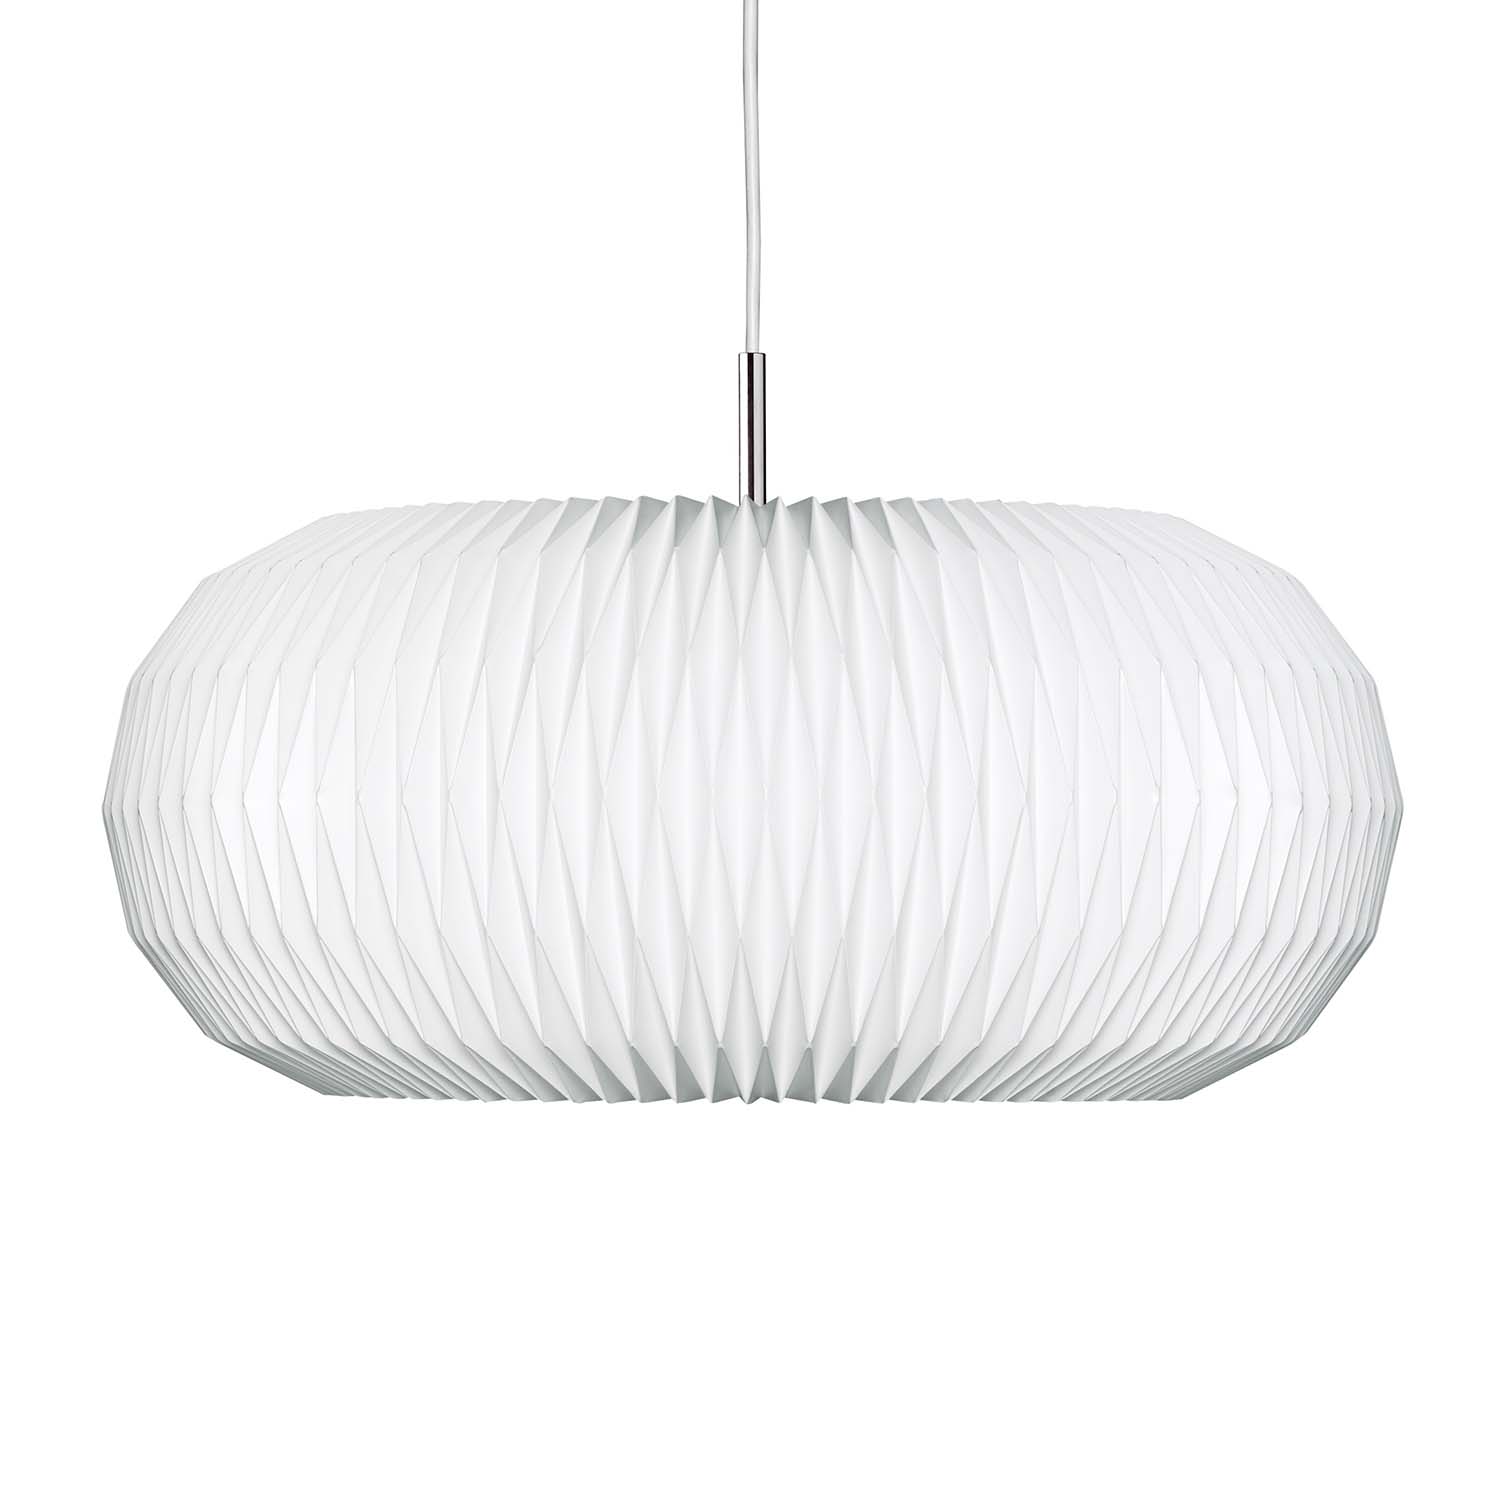 DONUT - Circular pendant light in handmade white pleated PVC